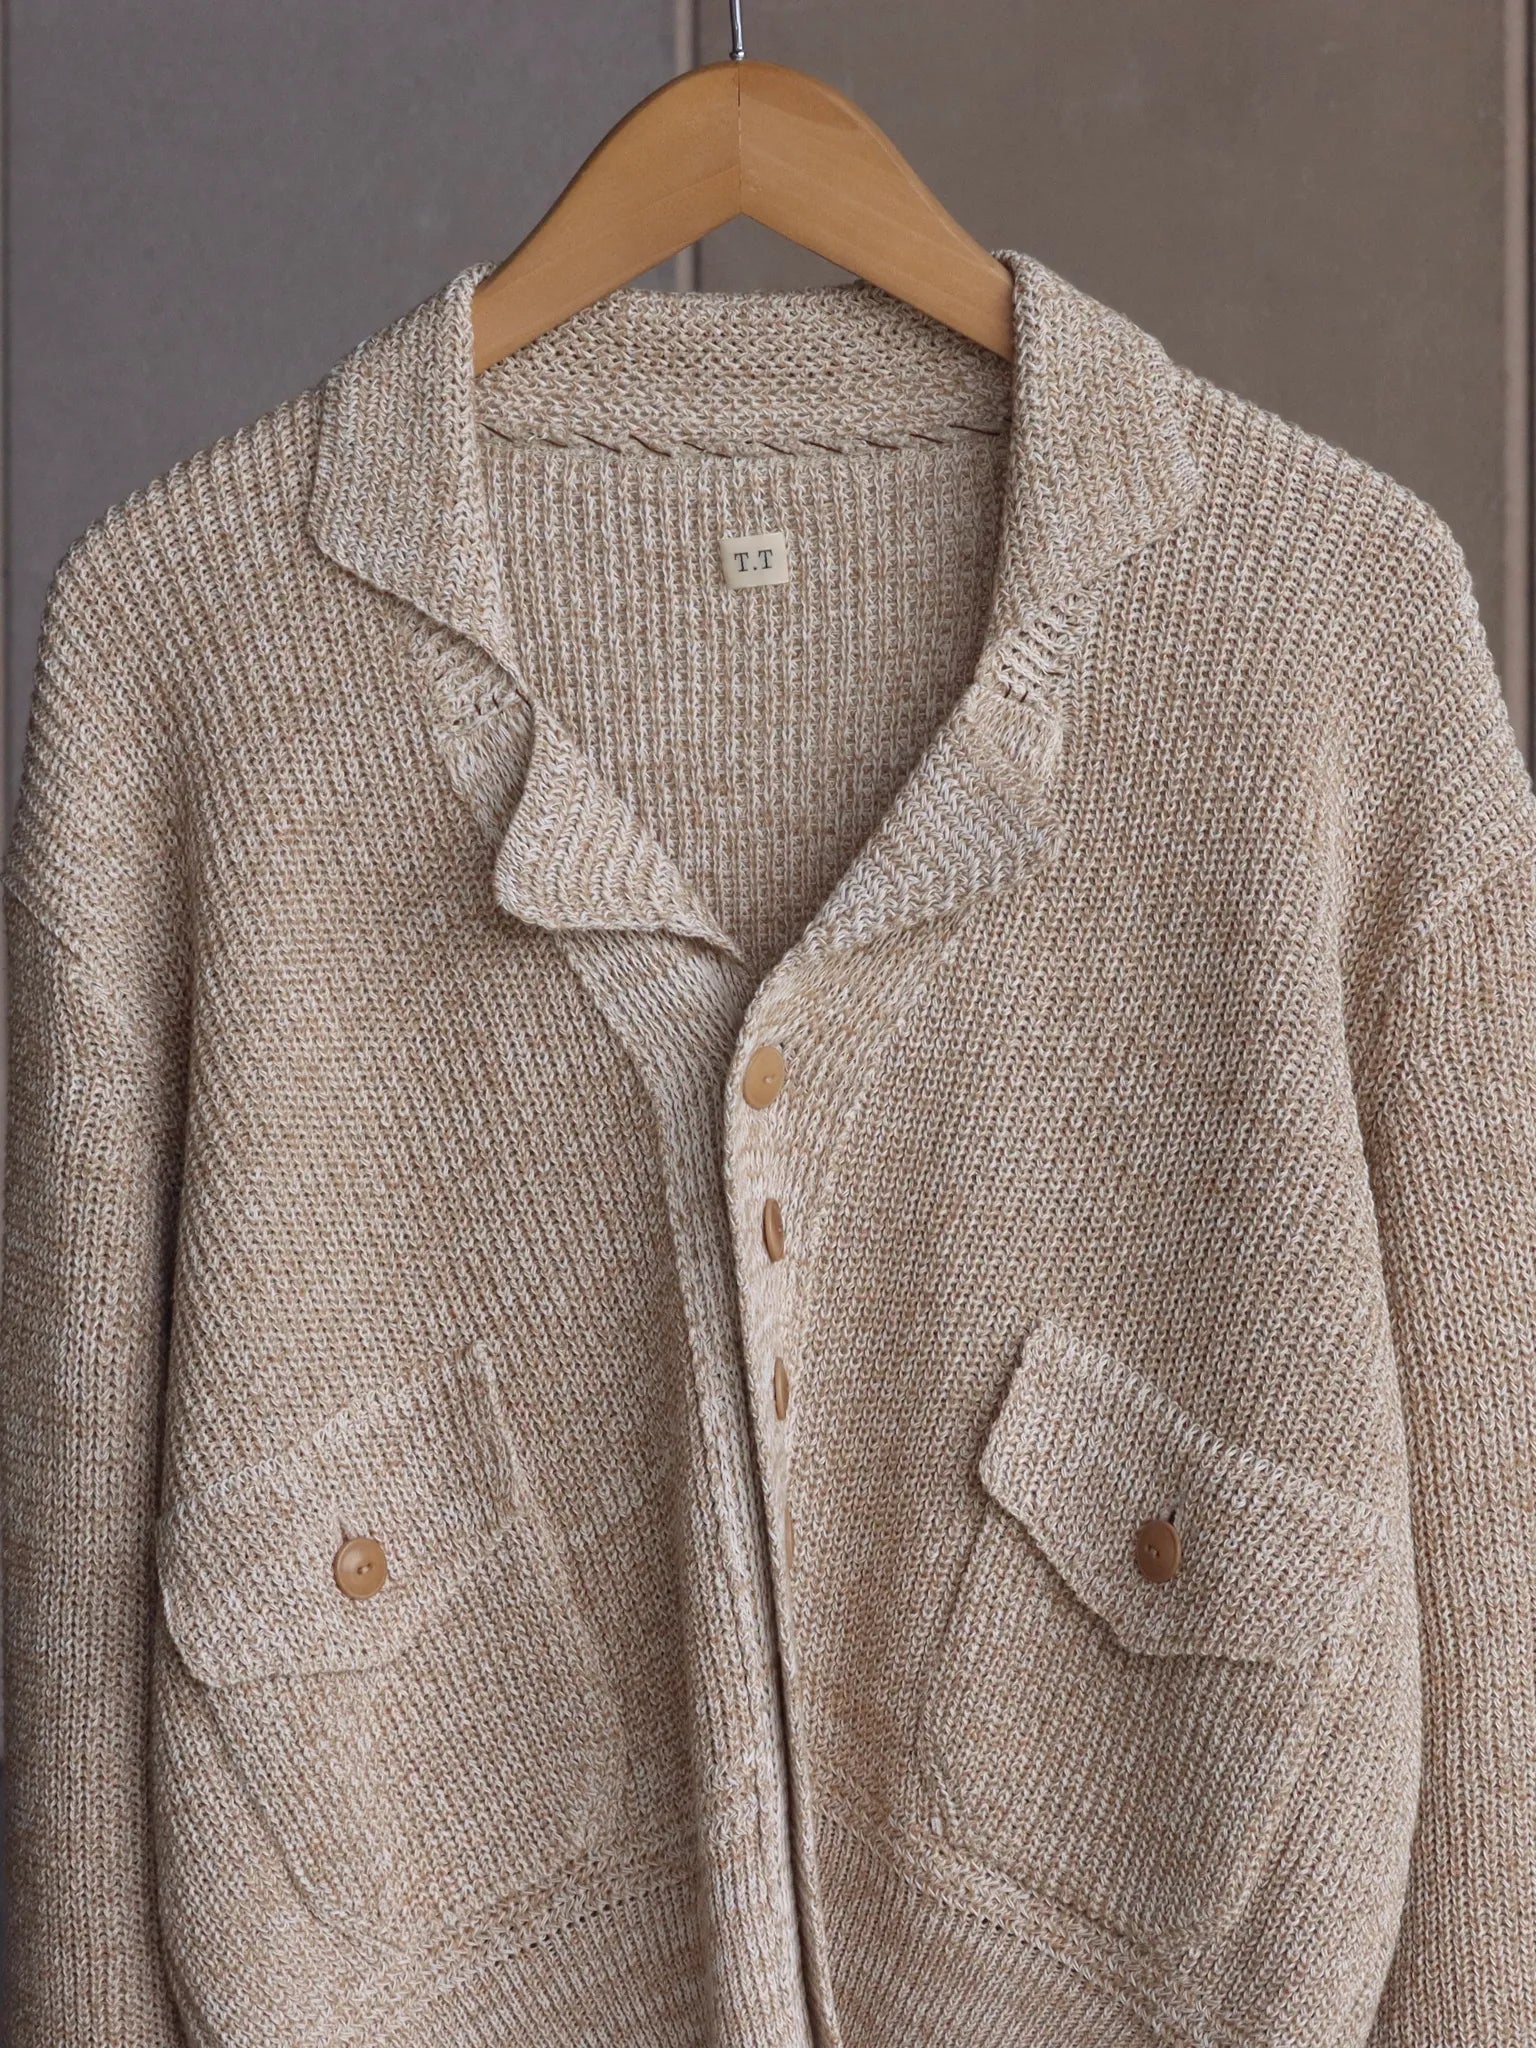 t-t-knit-sports-jacket-c-1930s-mix-beige-3